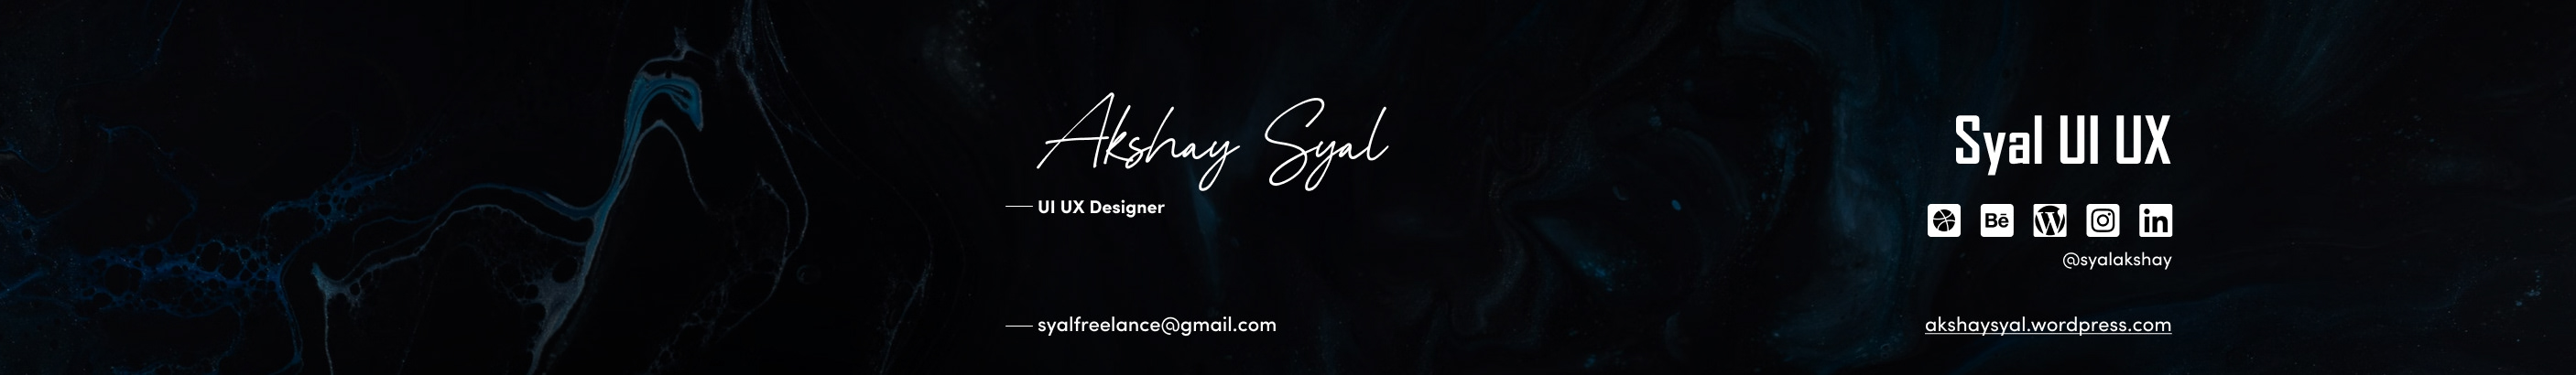 Akshay Syal's profile banner